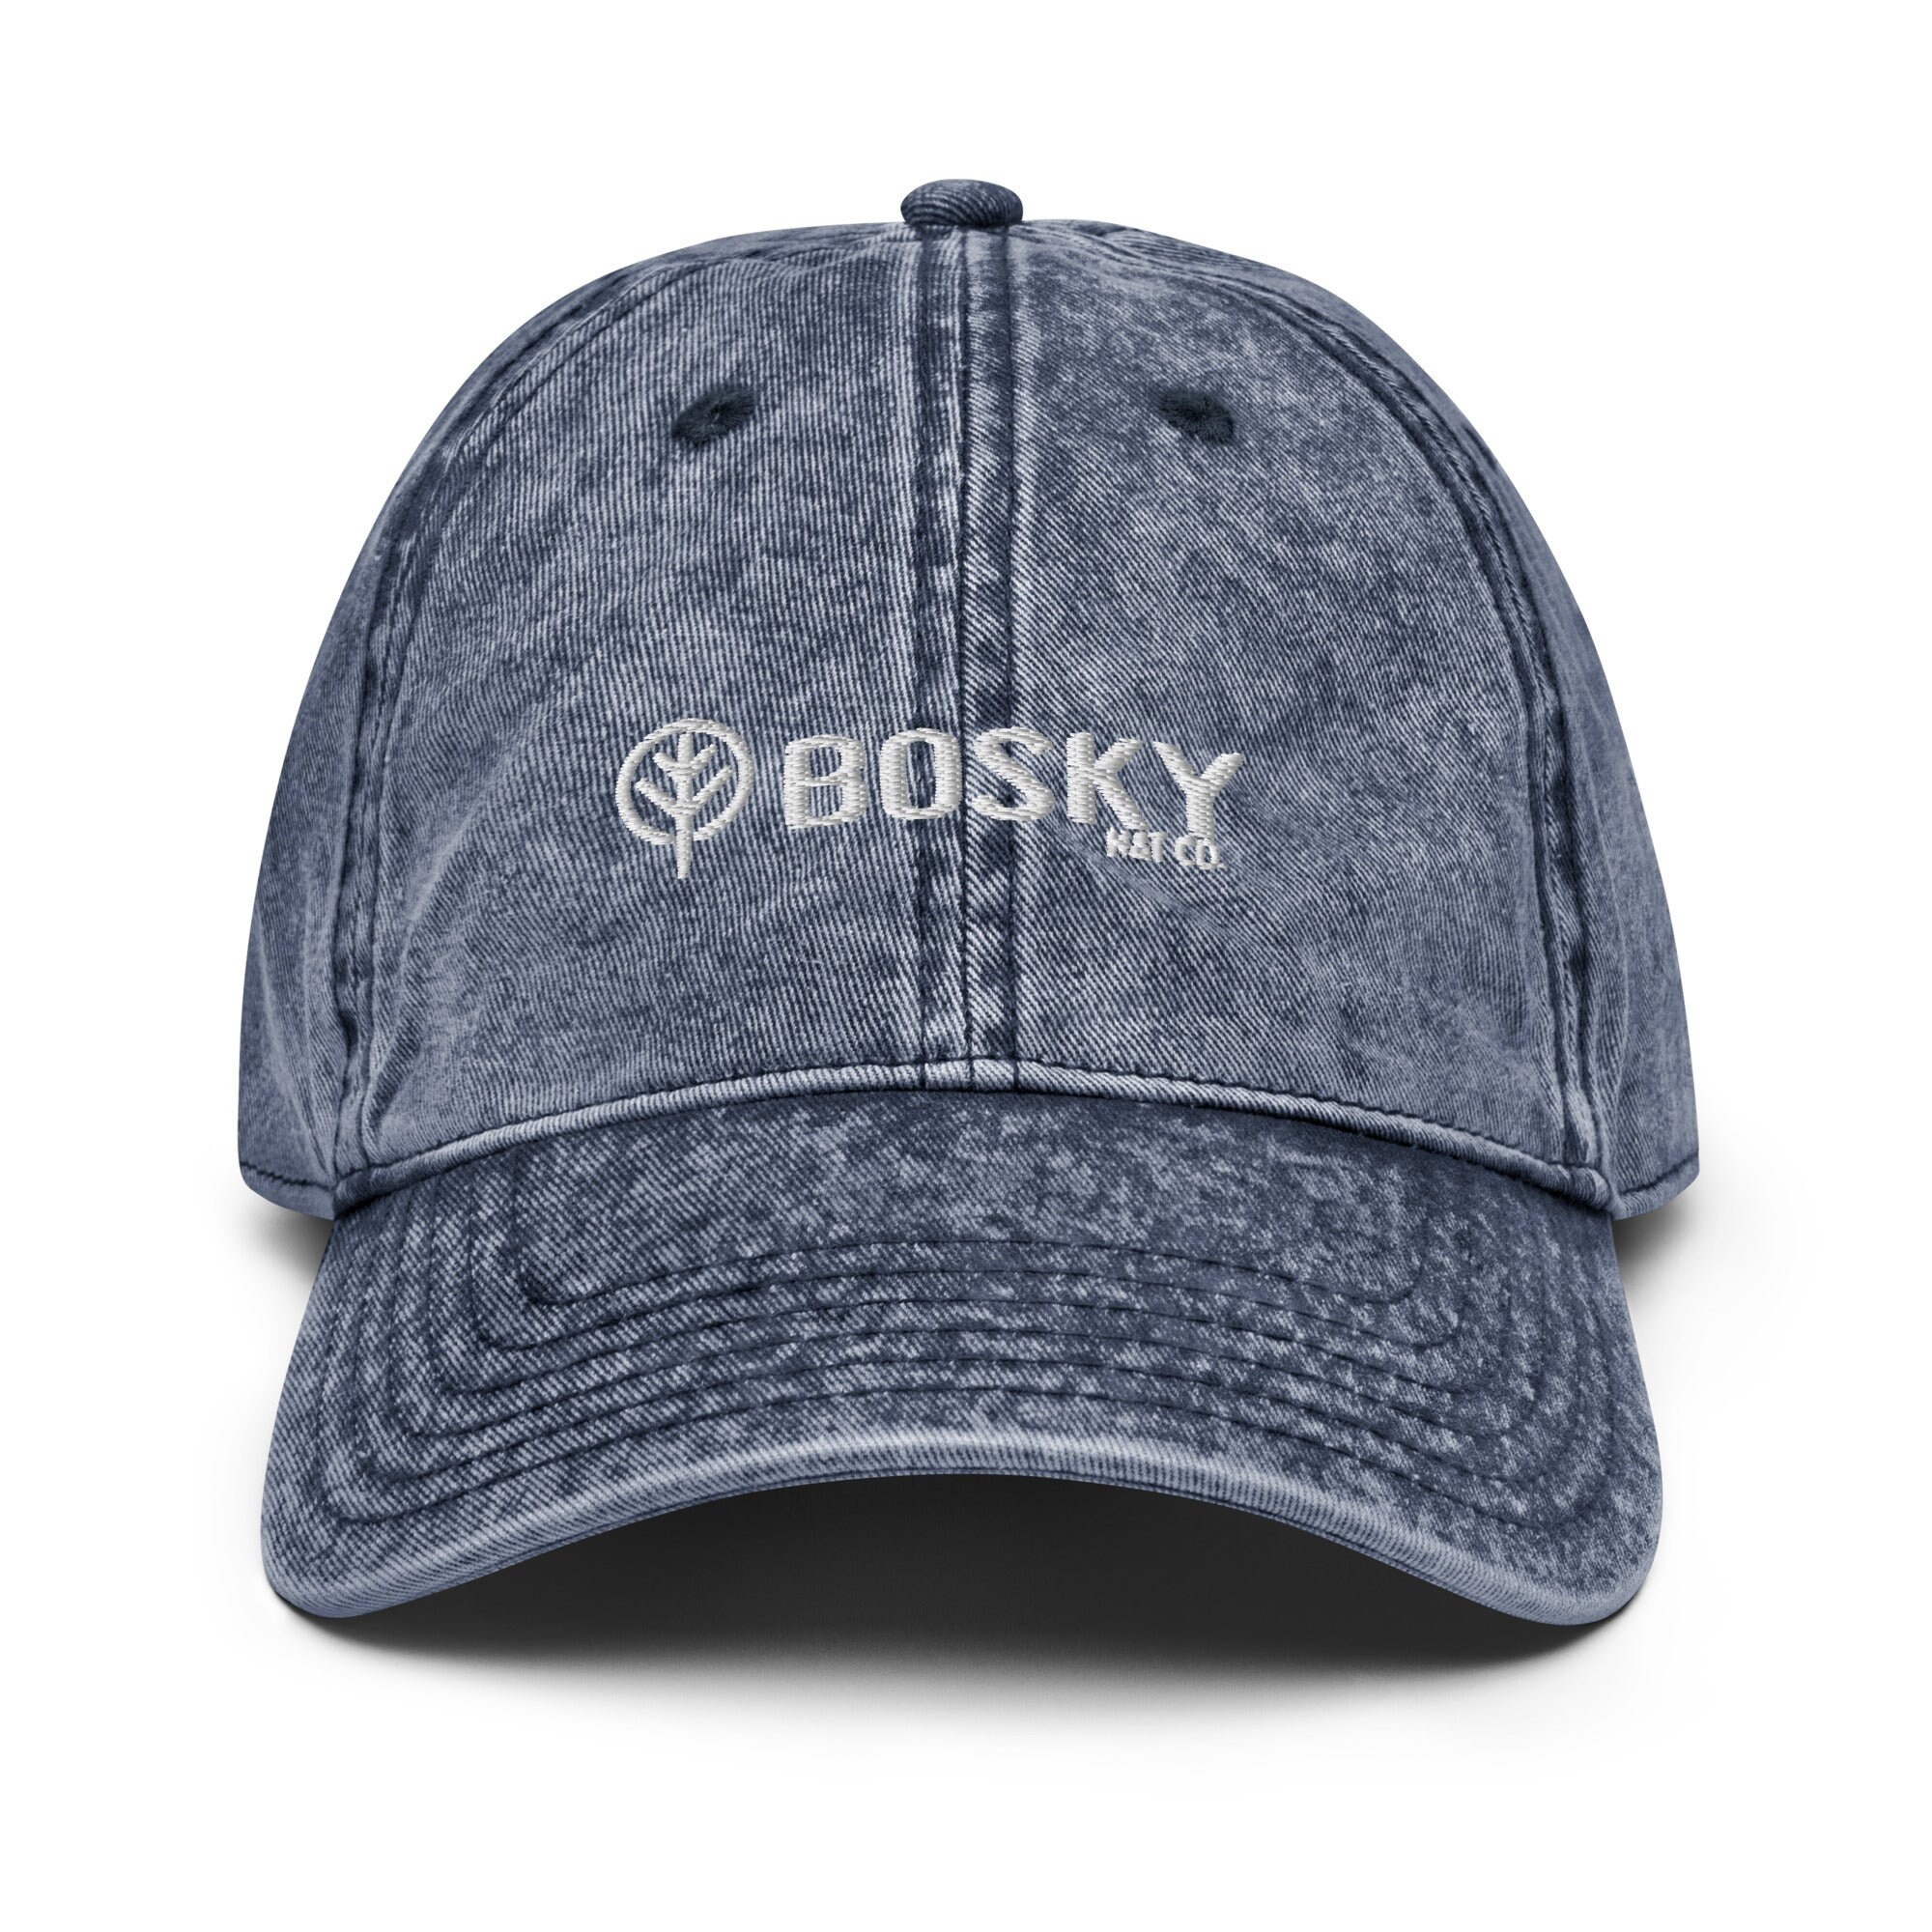 Bosky Hat Co.